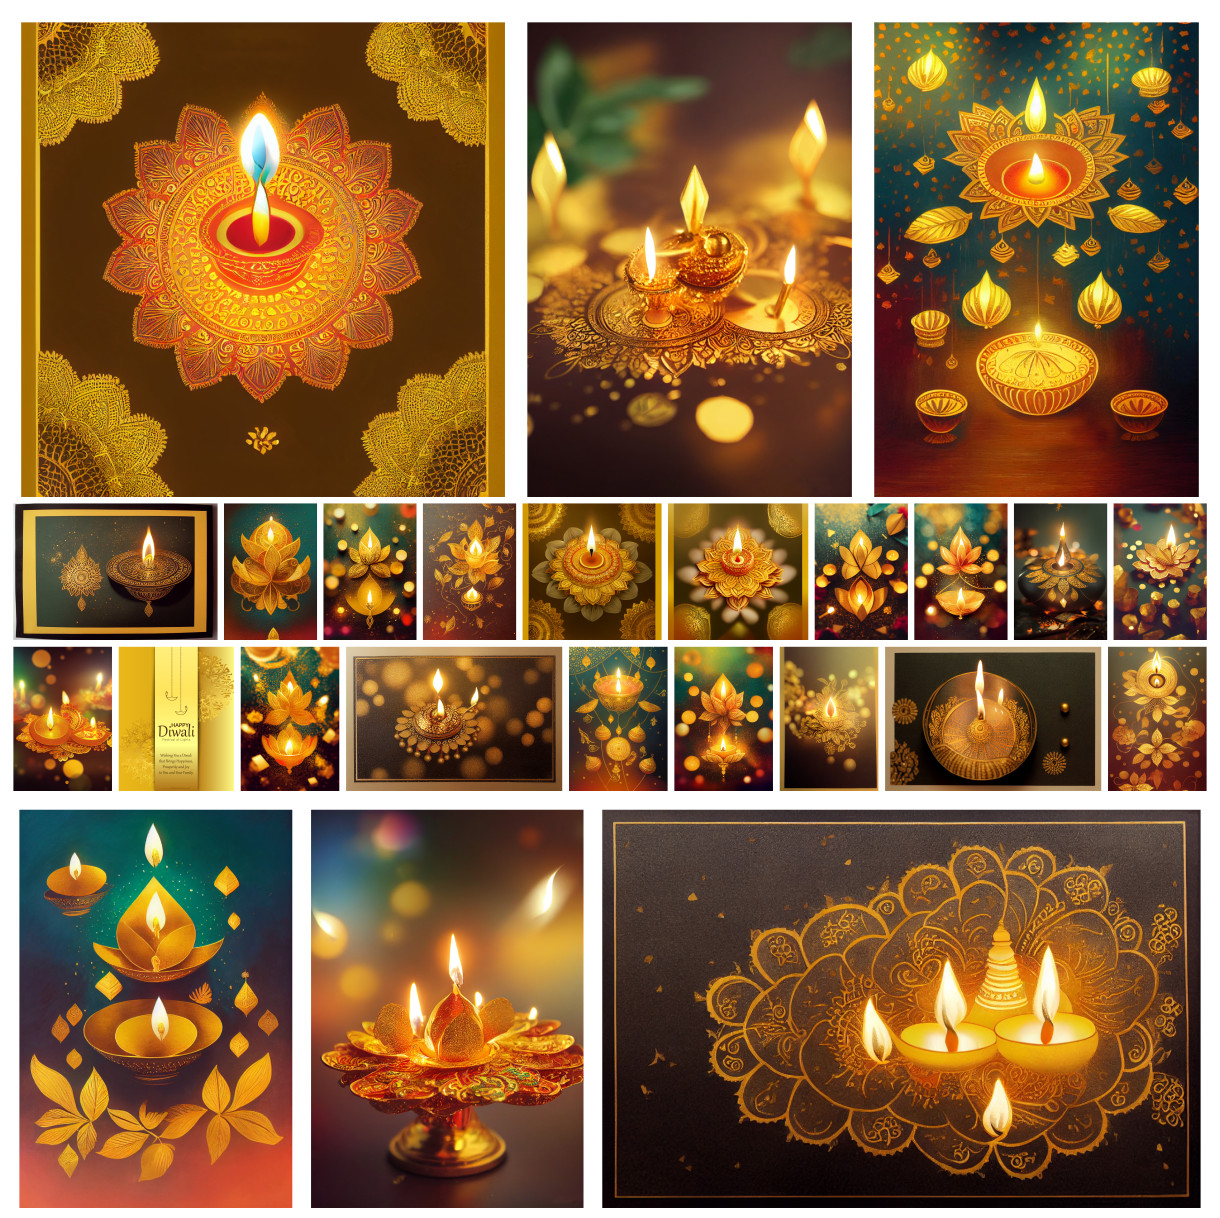 Radiate Elegance: Golden Diwali Diya Backgrounds and Greeting Cards